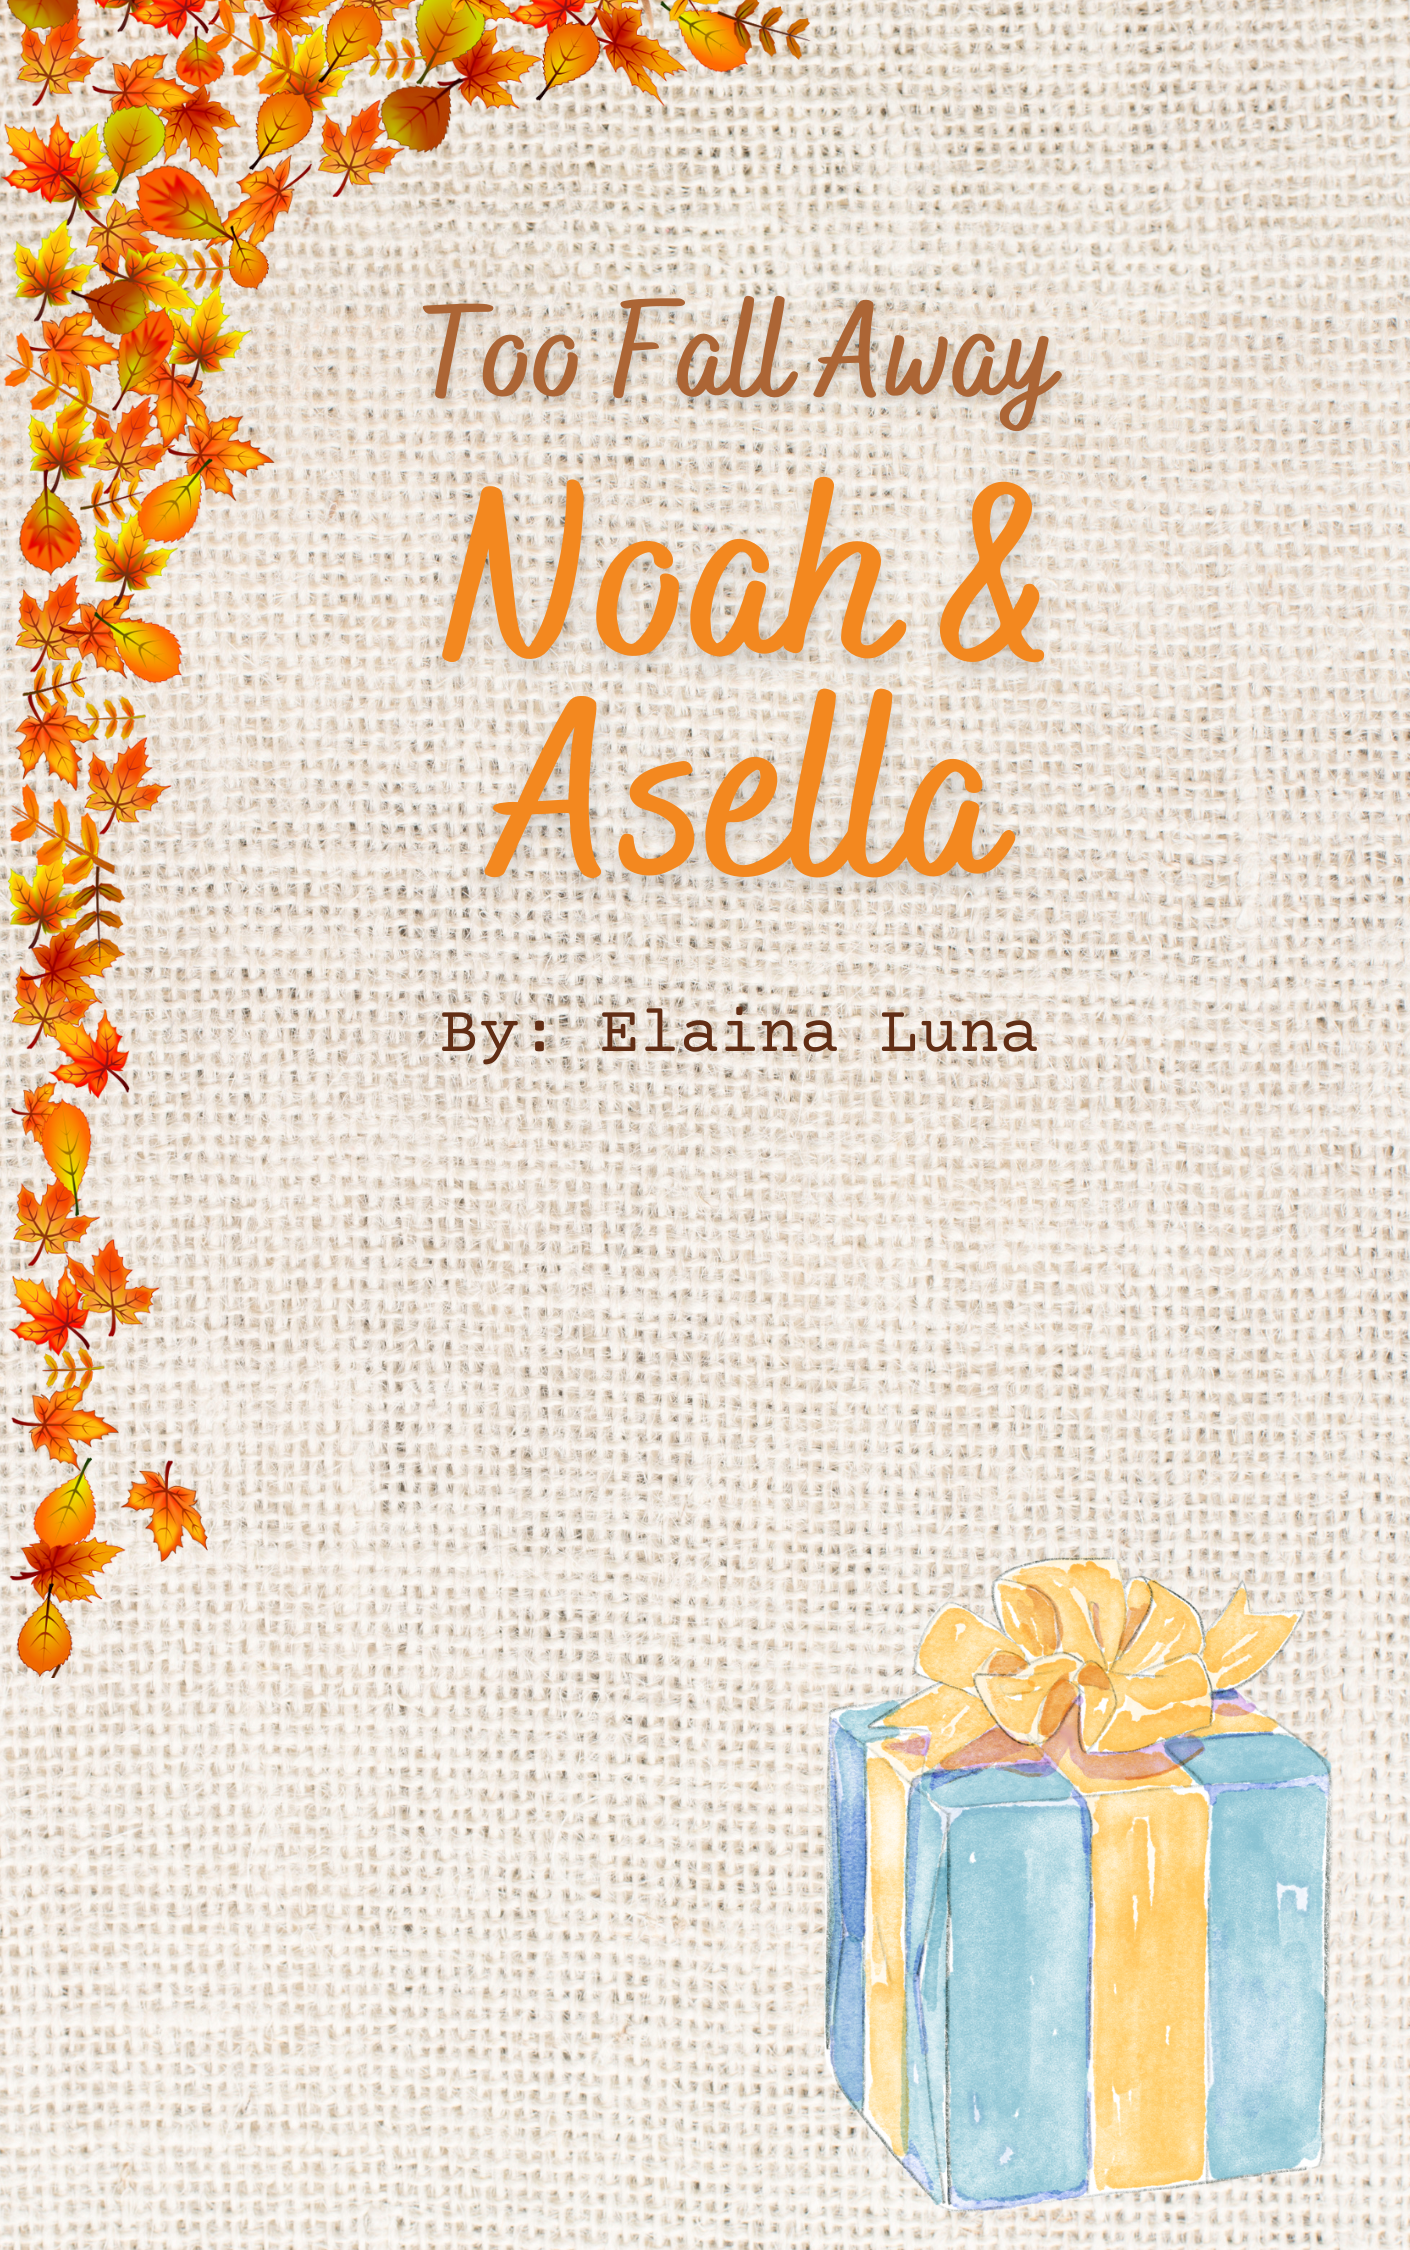 Noah & Asella: Too Fall Away